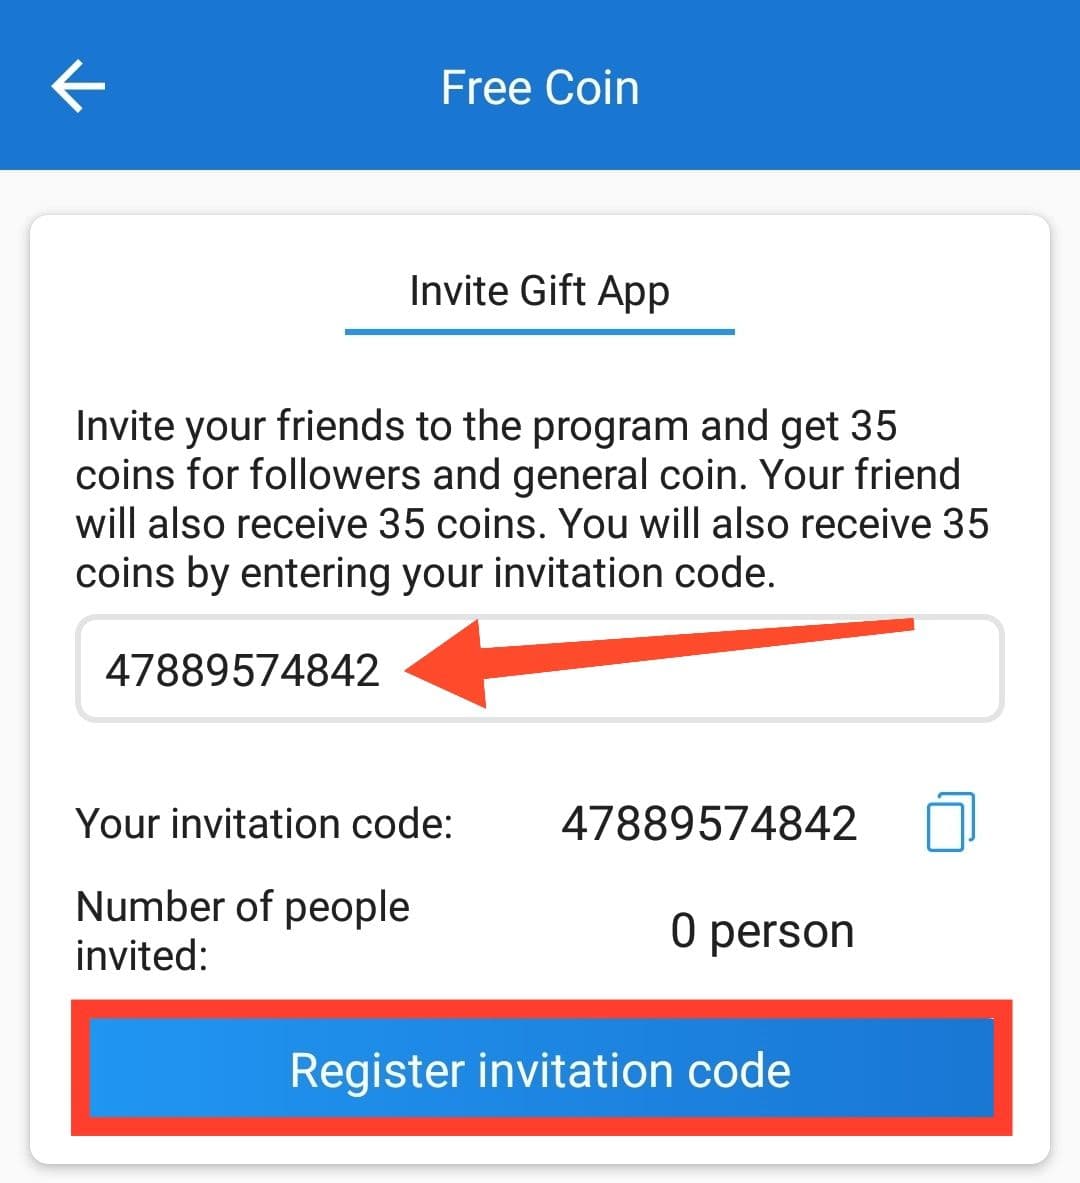 Register Invitation Code